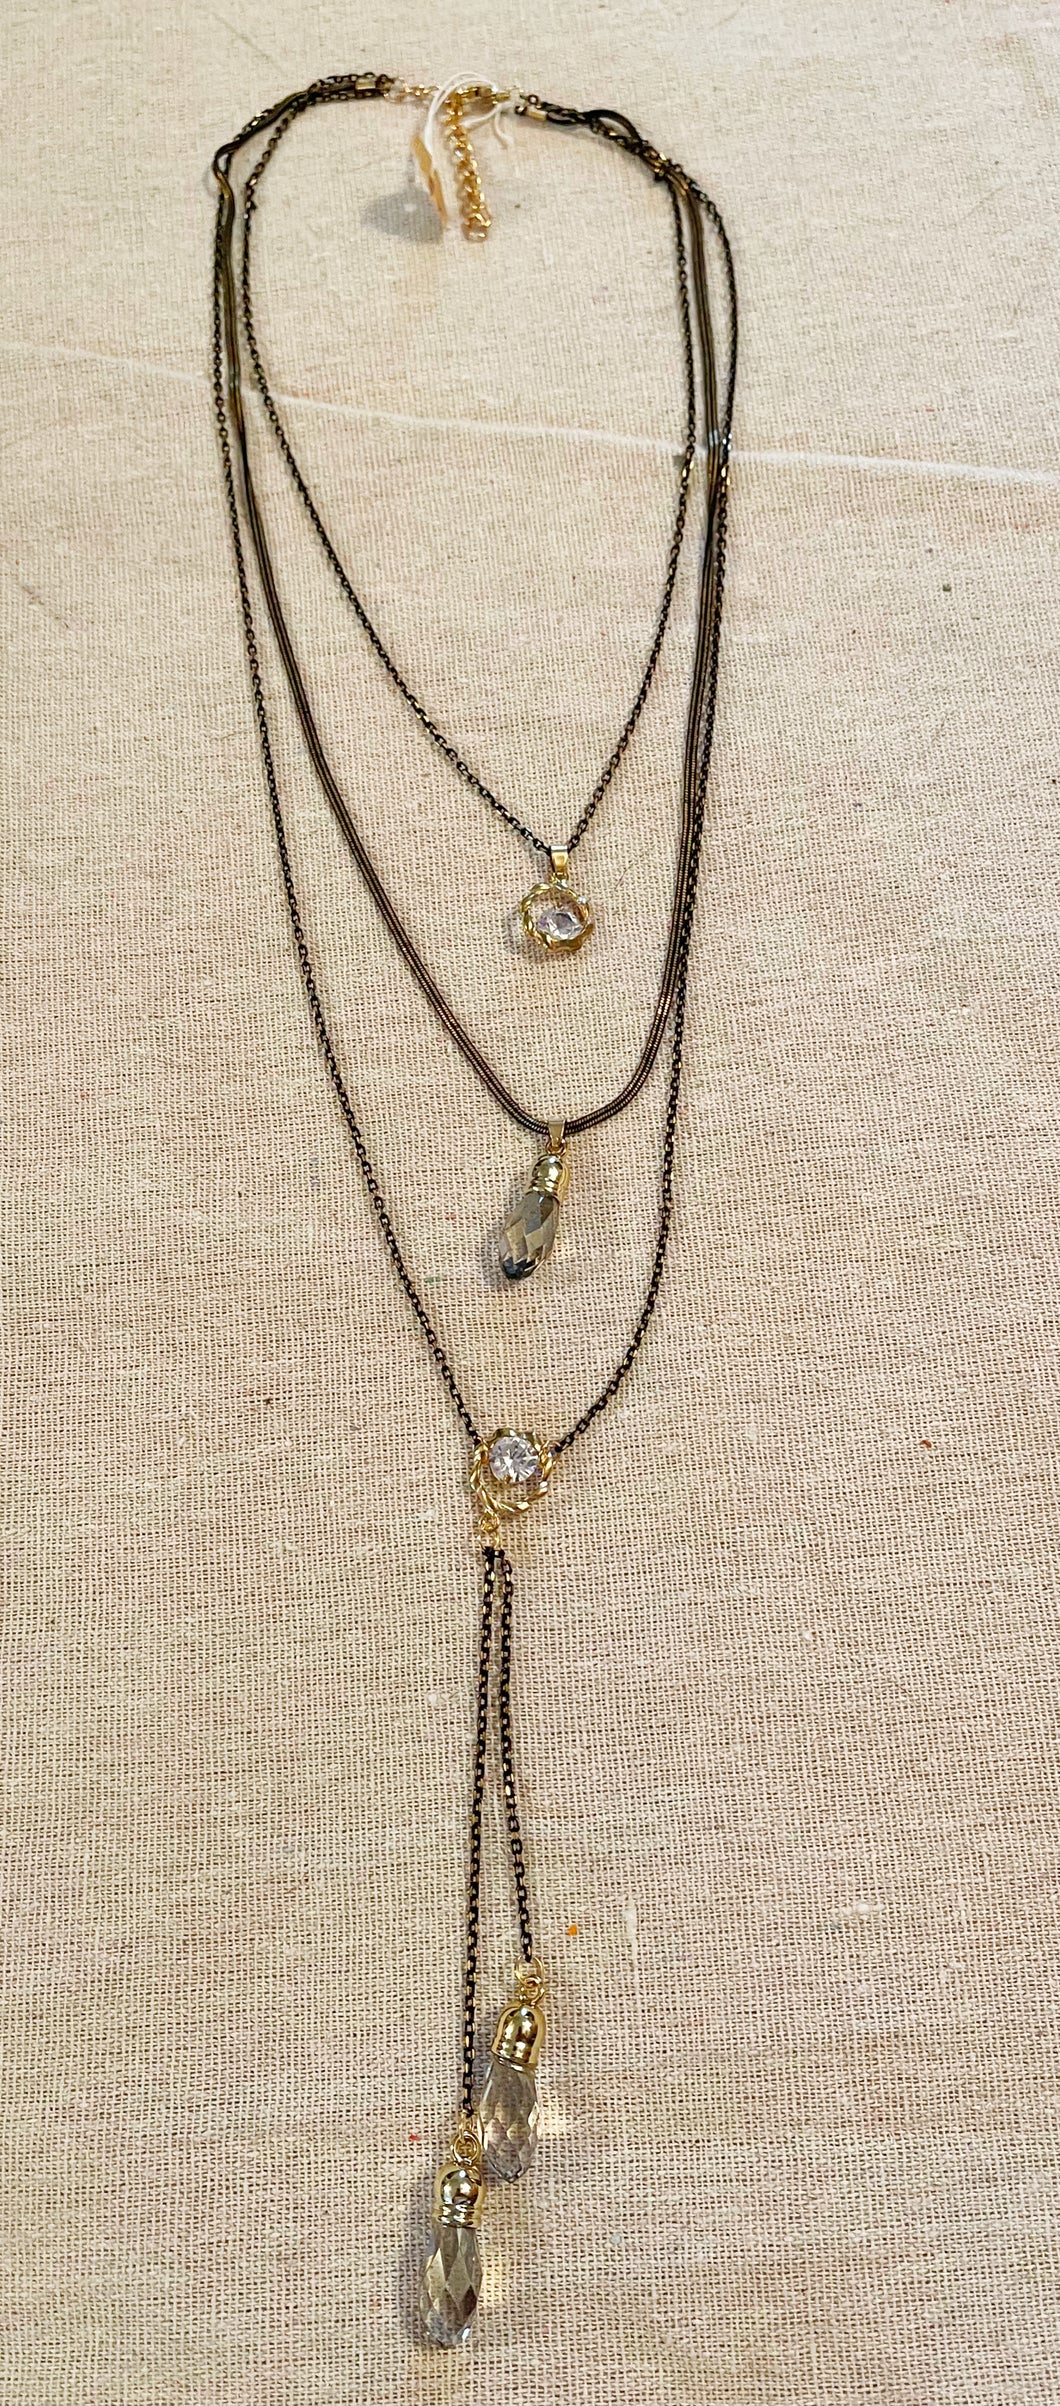 Long Necklace - Black & Gold 3-Tier Necklace